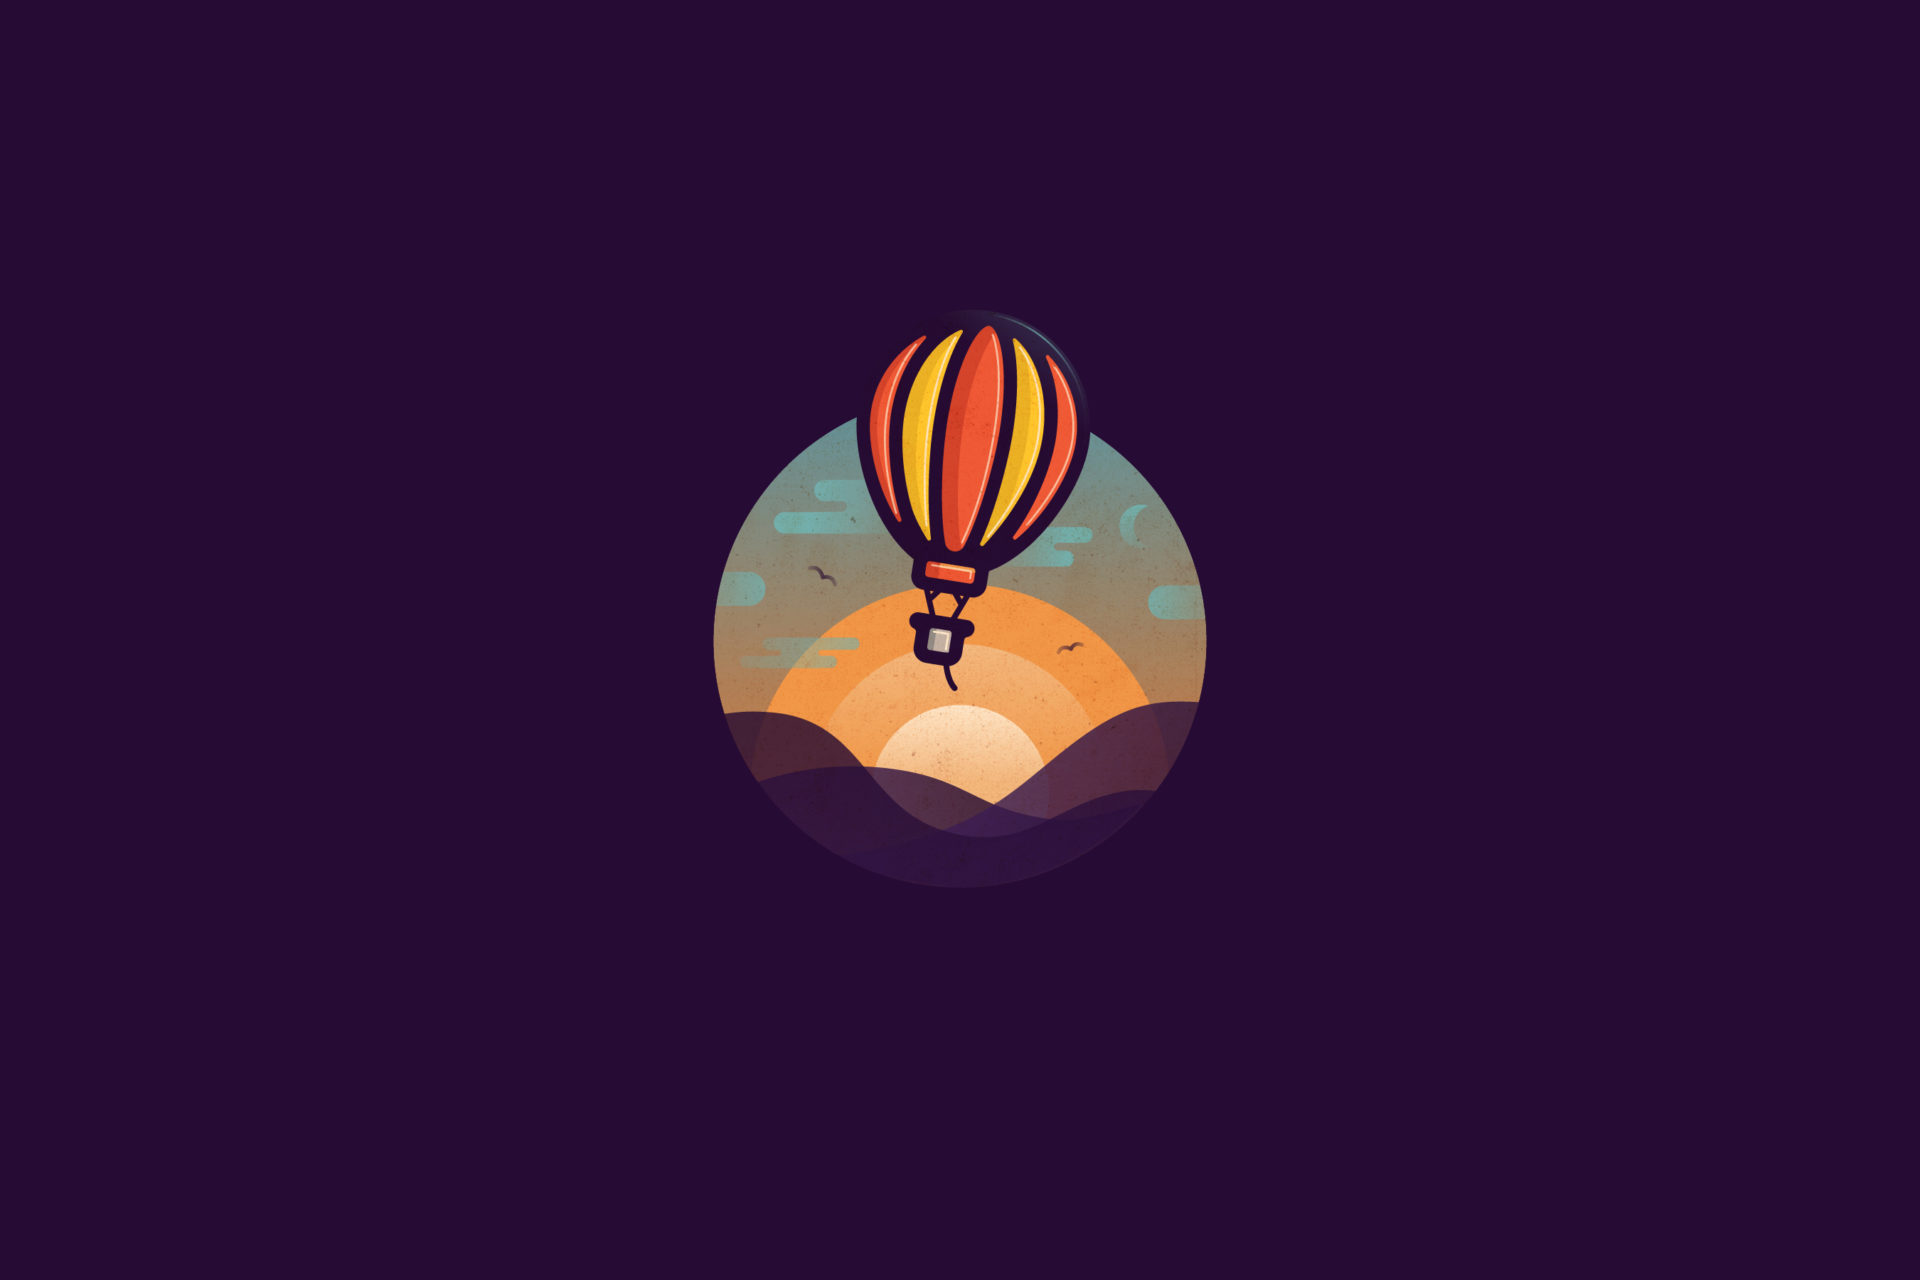 A desktop wallpaper of a hot air balloon ride